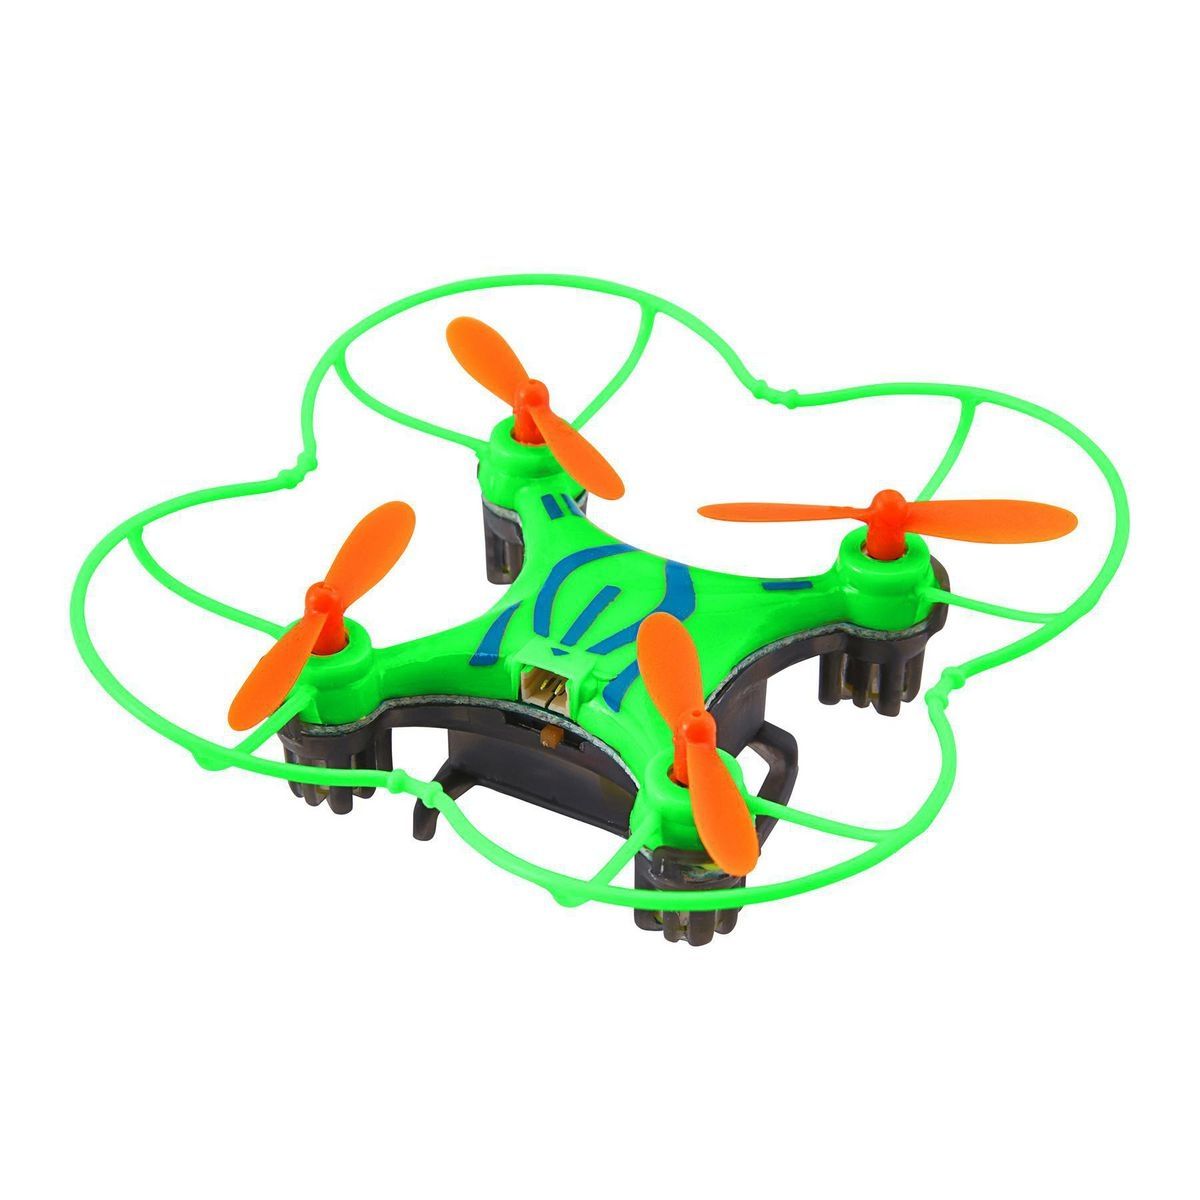 PROPEL Pocket Air Drone Quadcopter